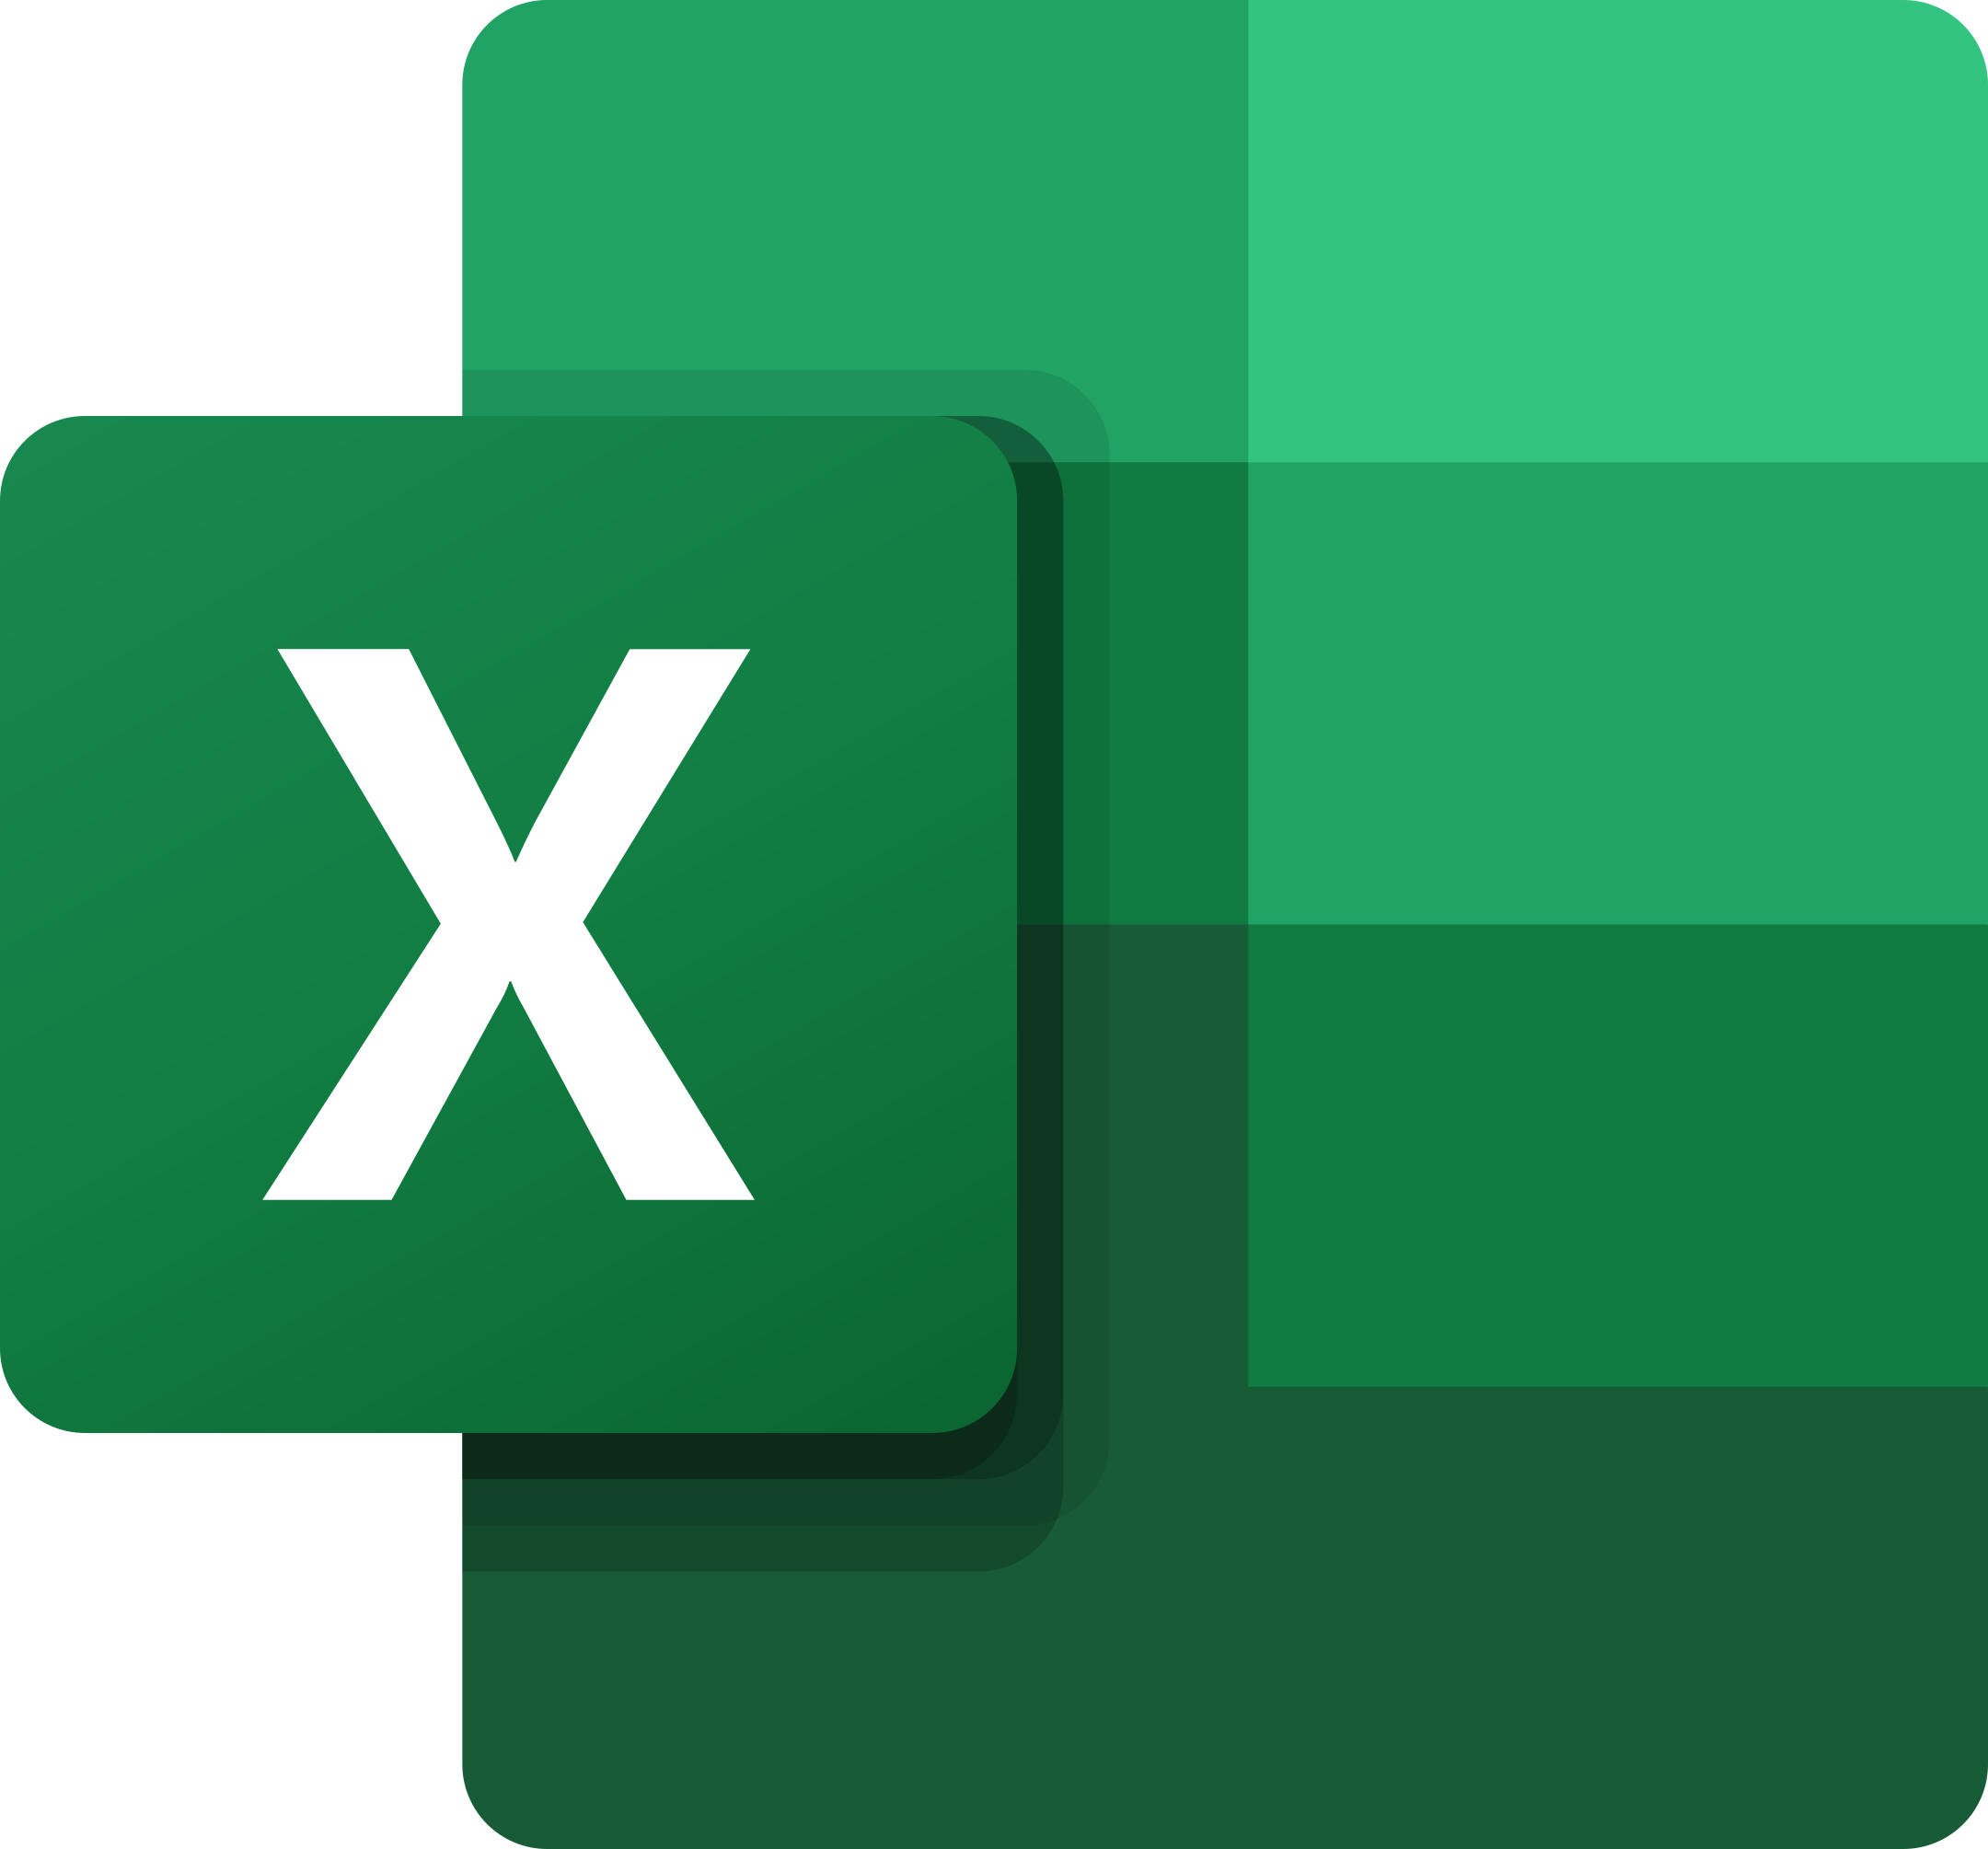 excel logo 1 - Microsoft Excel Logo